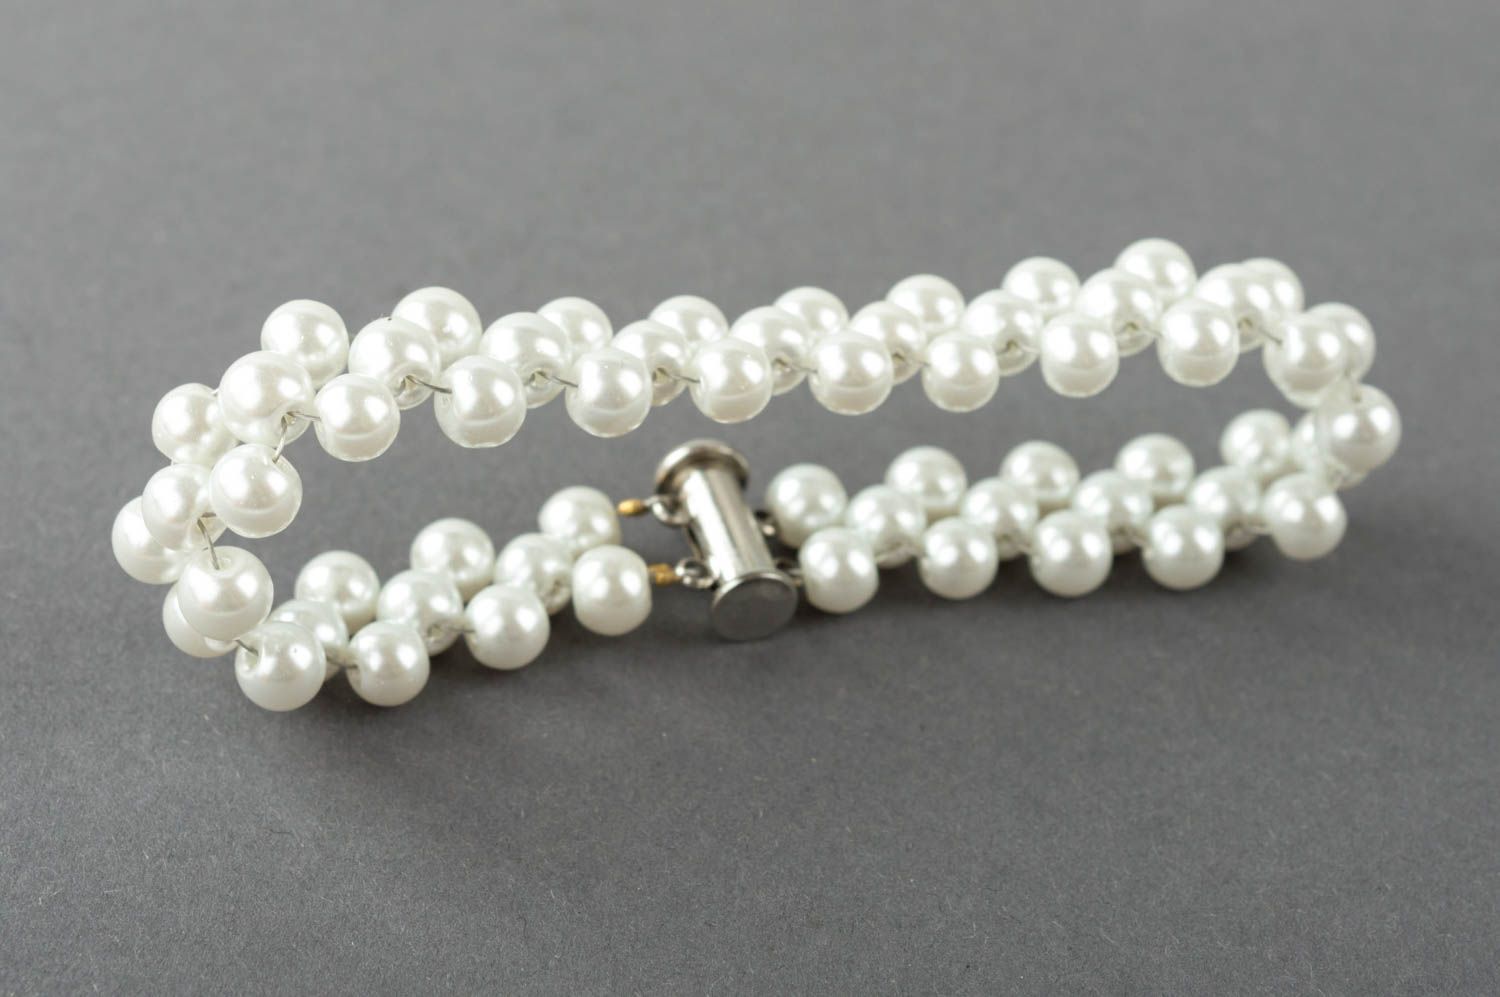 Handmade weißes Armband Perlen Schmuck Frauen Accessoire aus Kunstperlen schön foto 2